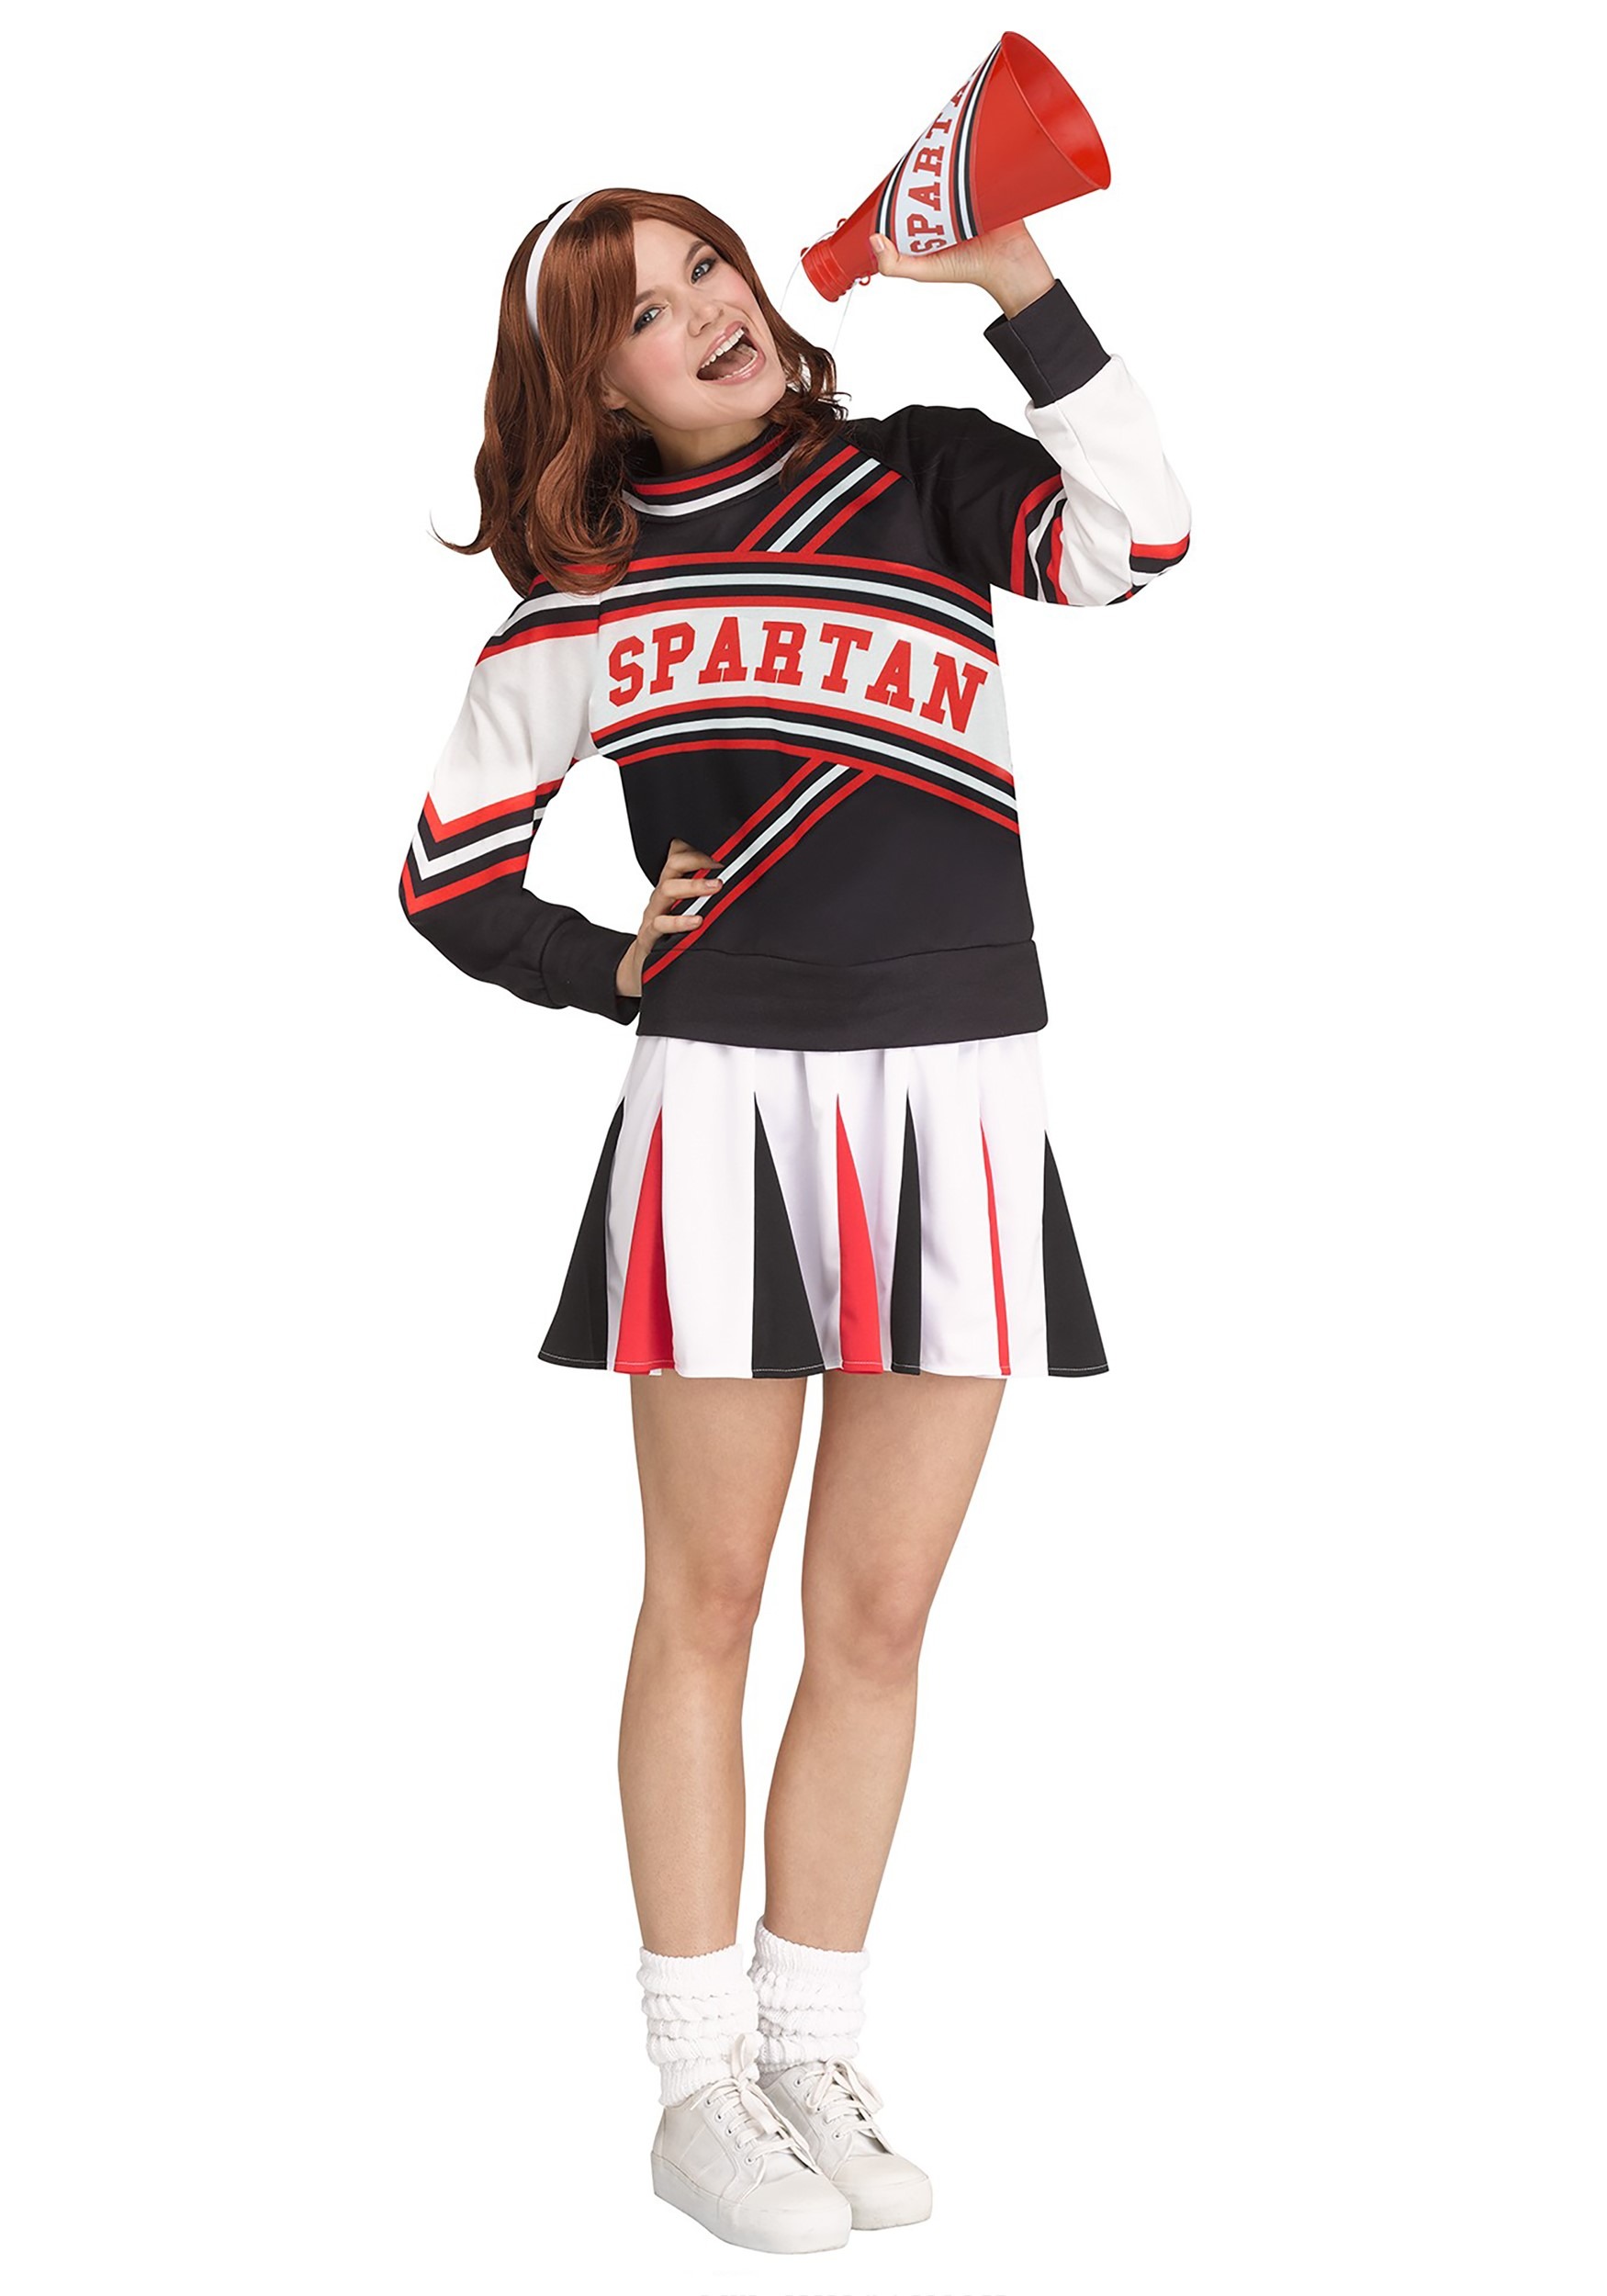 Saturday Night Live Women’s Spartan Cheerleader Costume